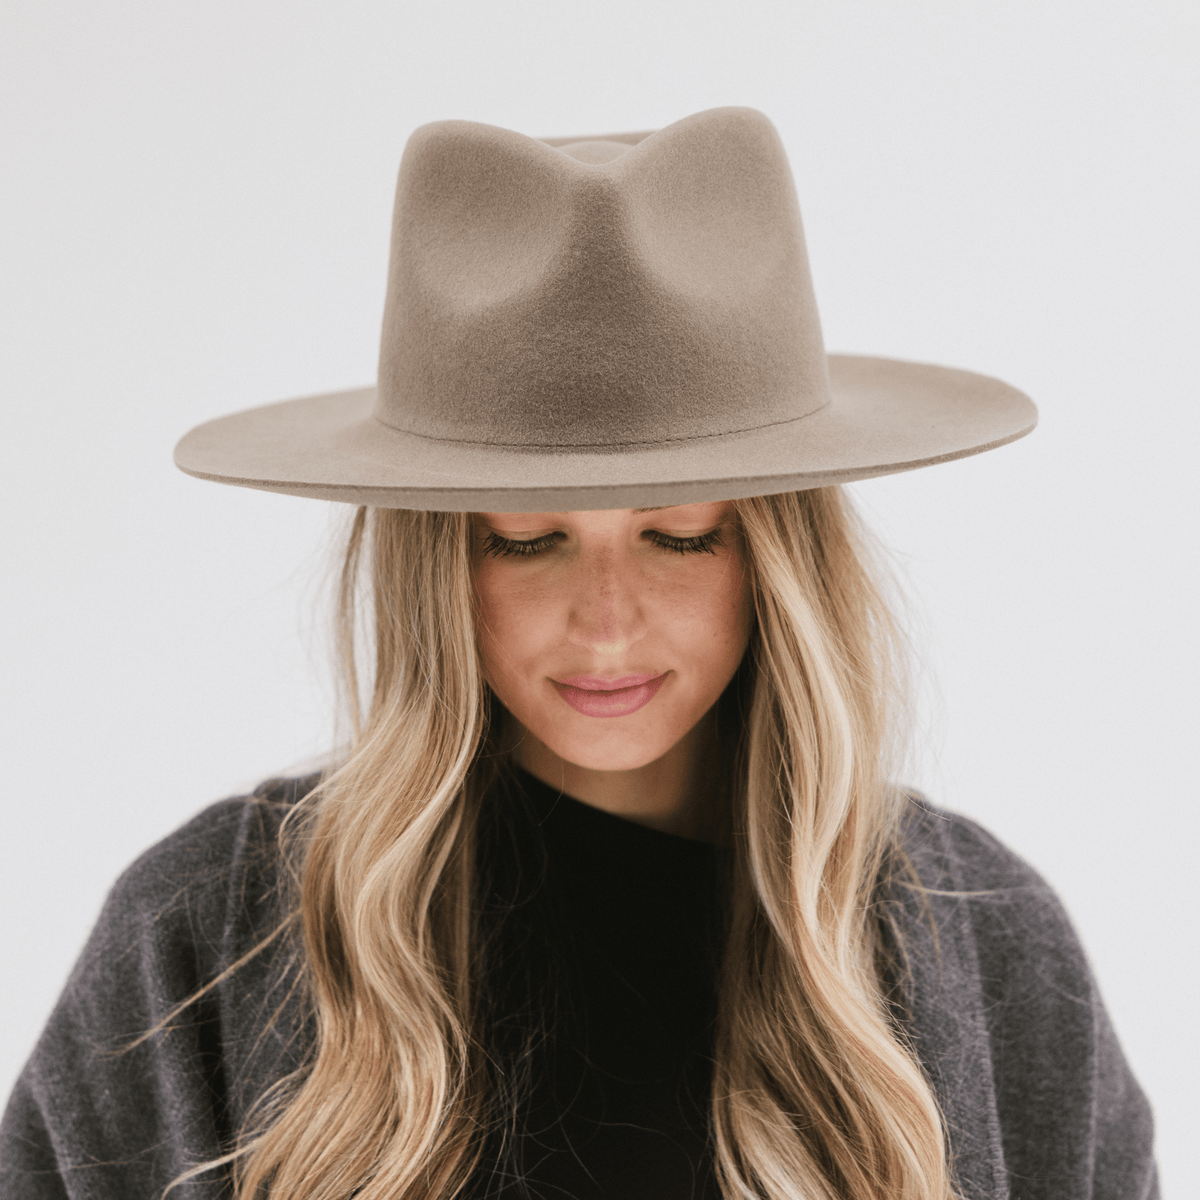 Women's Felt Hats - Shop Cute & Trendy Styles | GIGI PIP